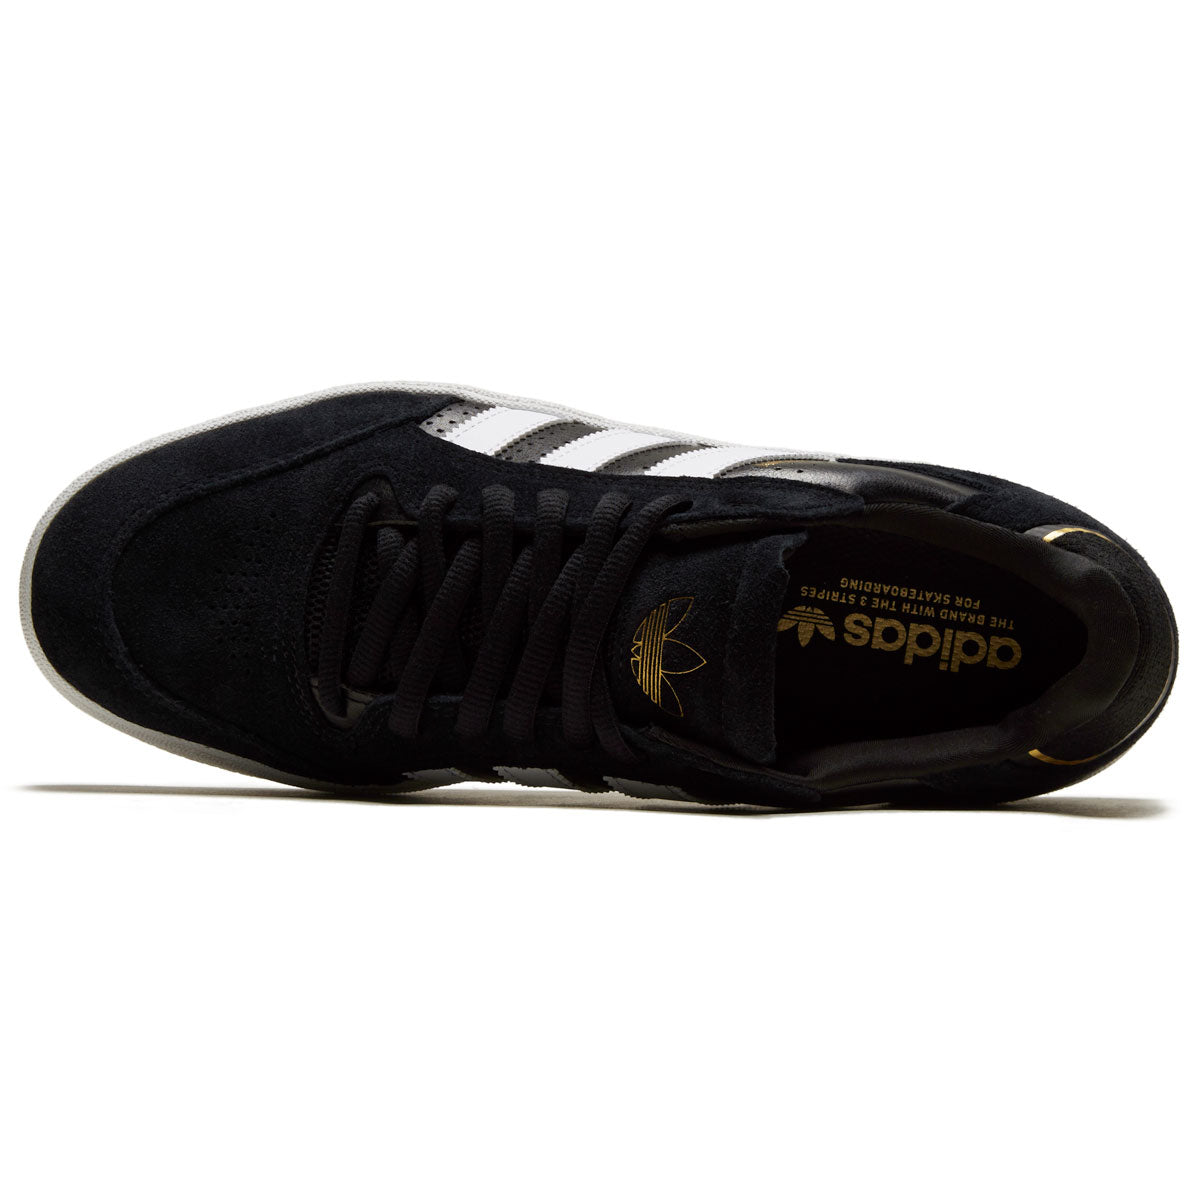 Adidas Tyshawn Low Shoes - Core Black/Cloud White/Gold Metallic image 3